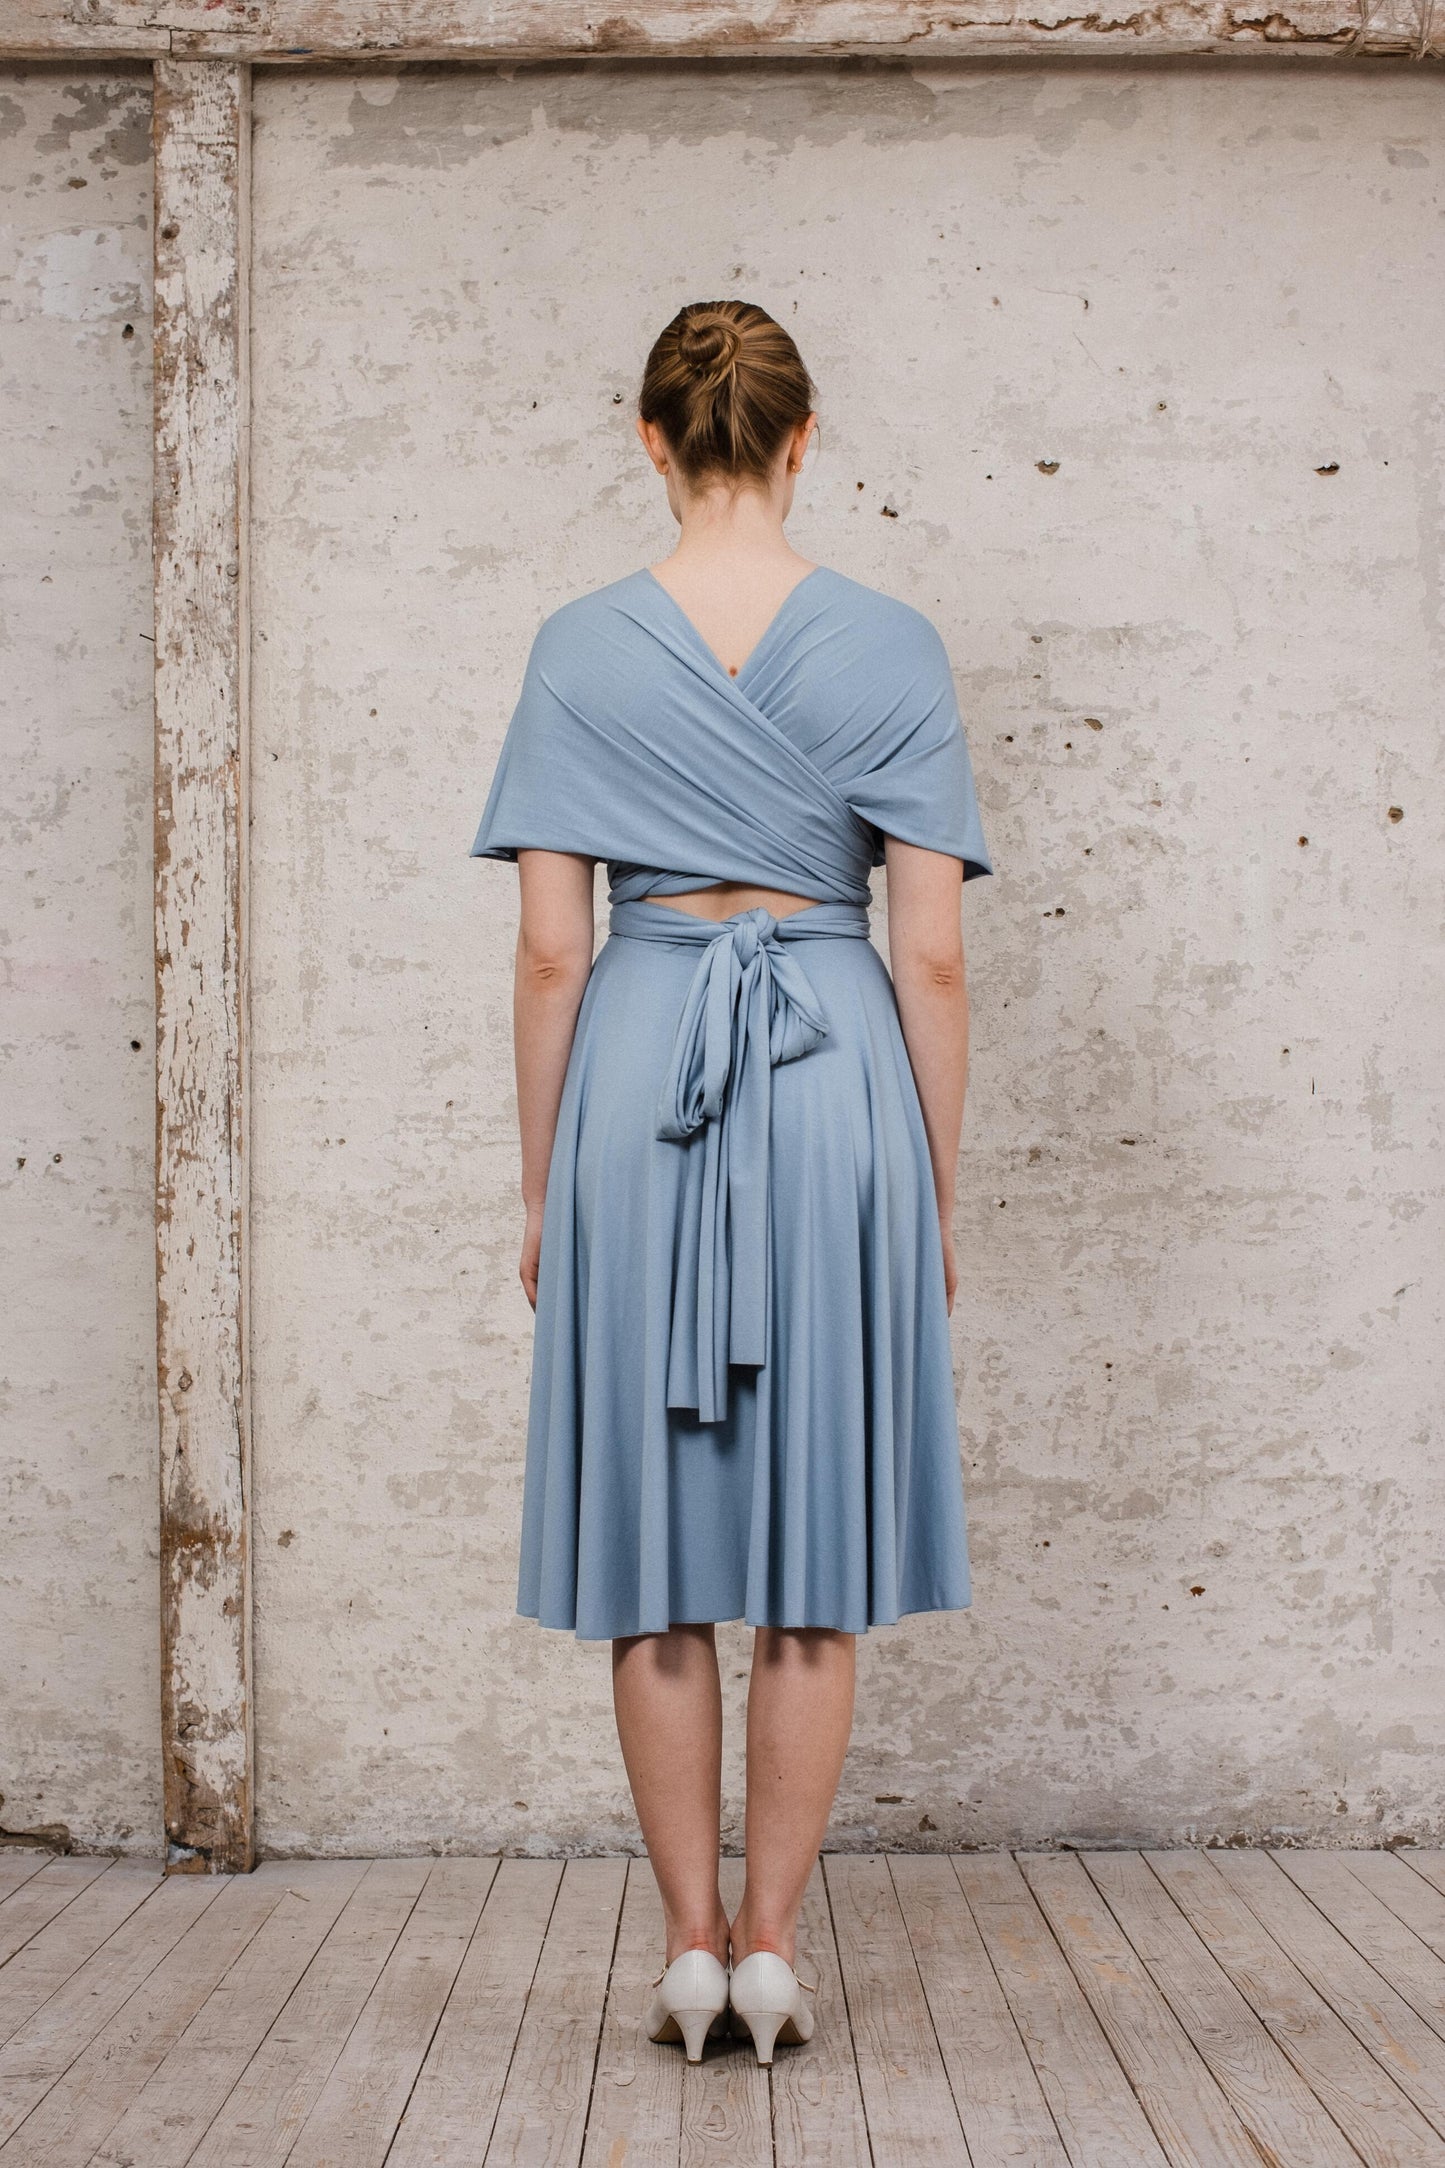 Infintiy Dress kurzes Multitie-Kleid in Taubenblau